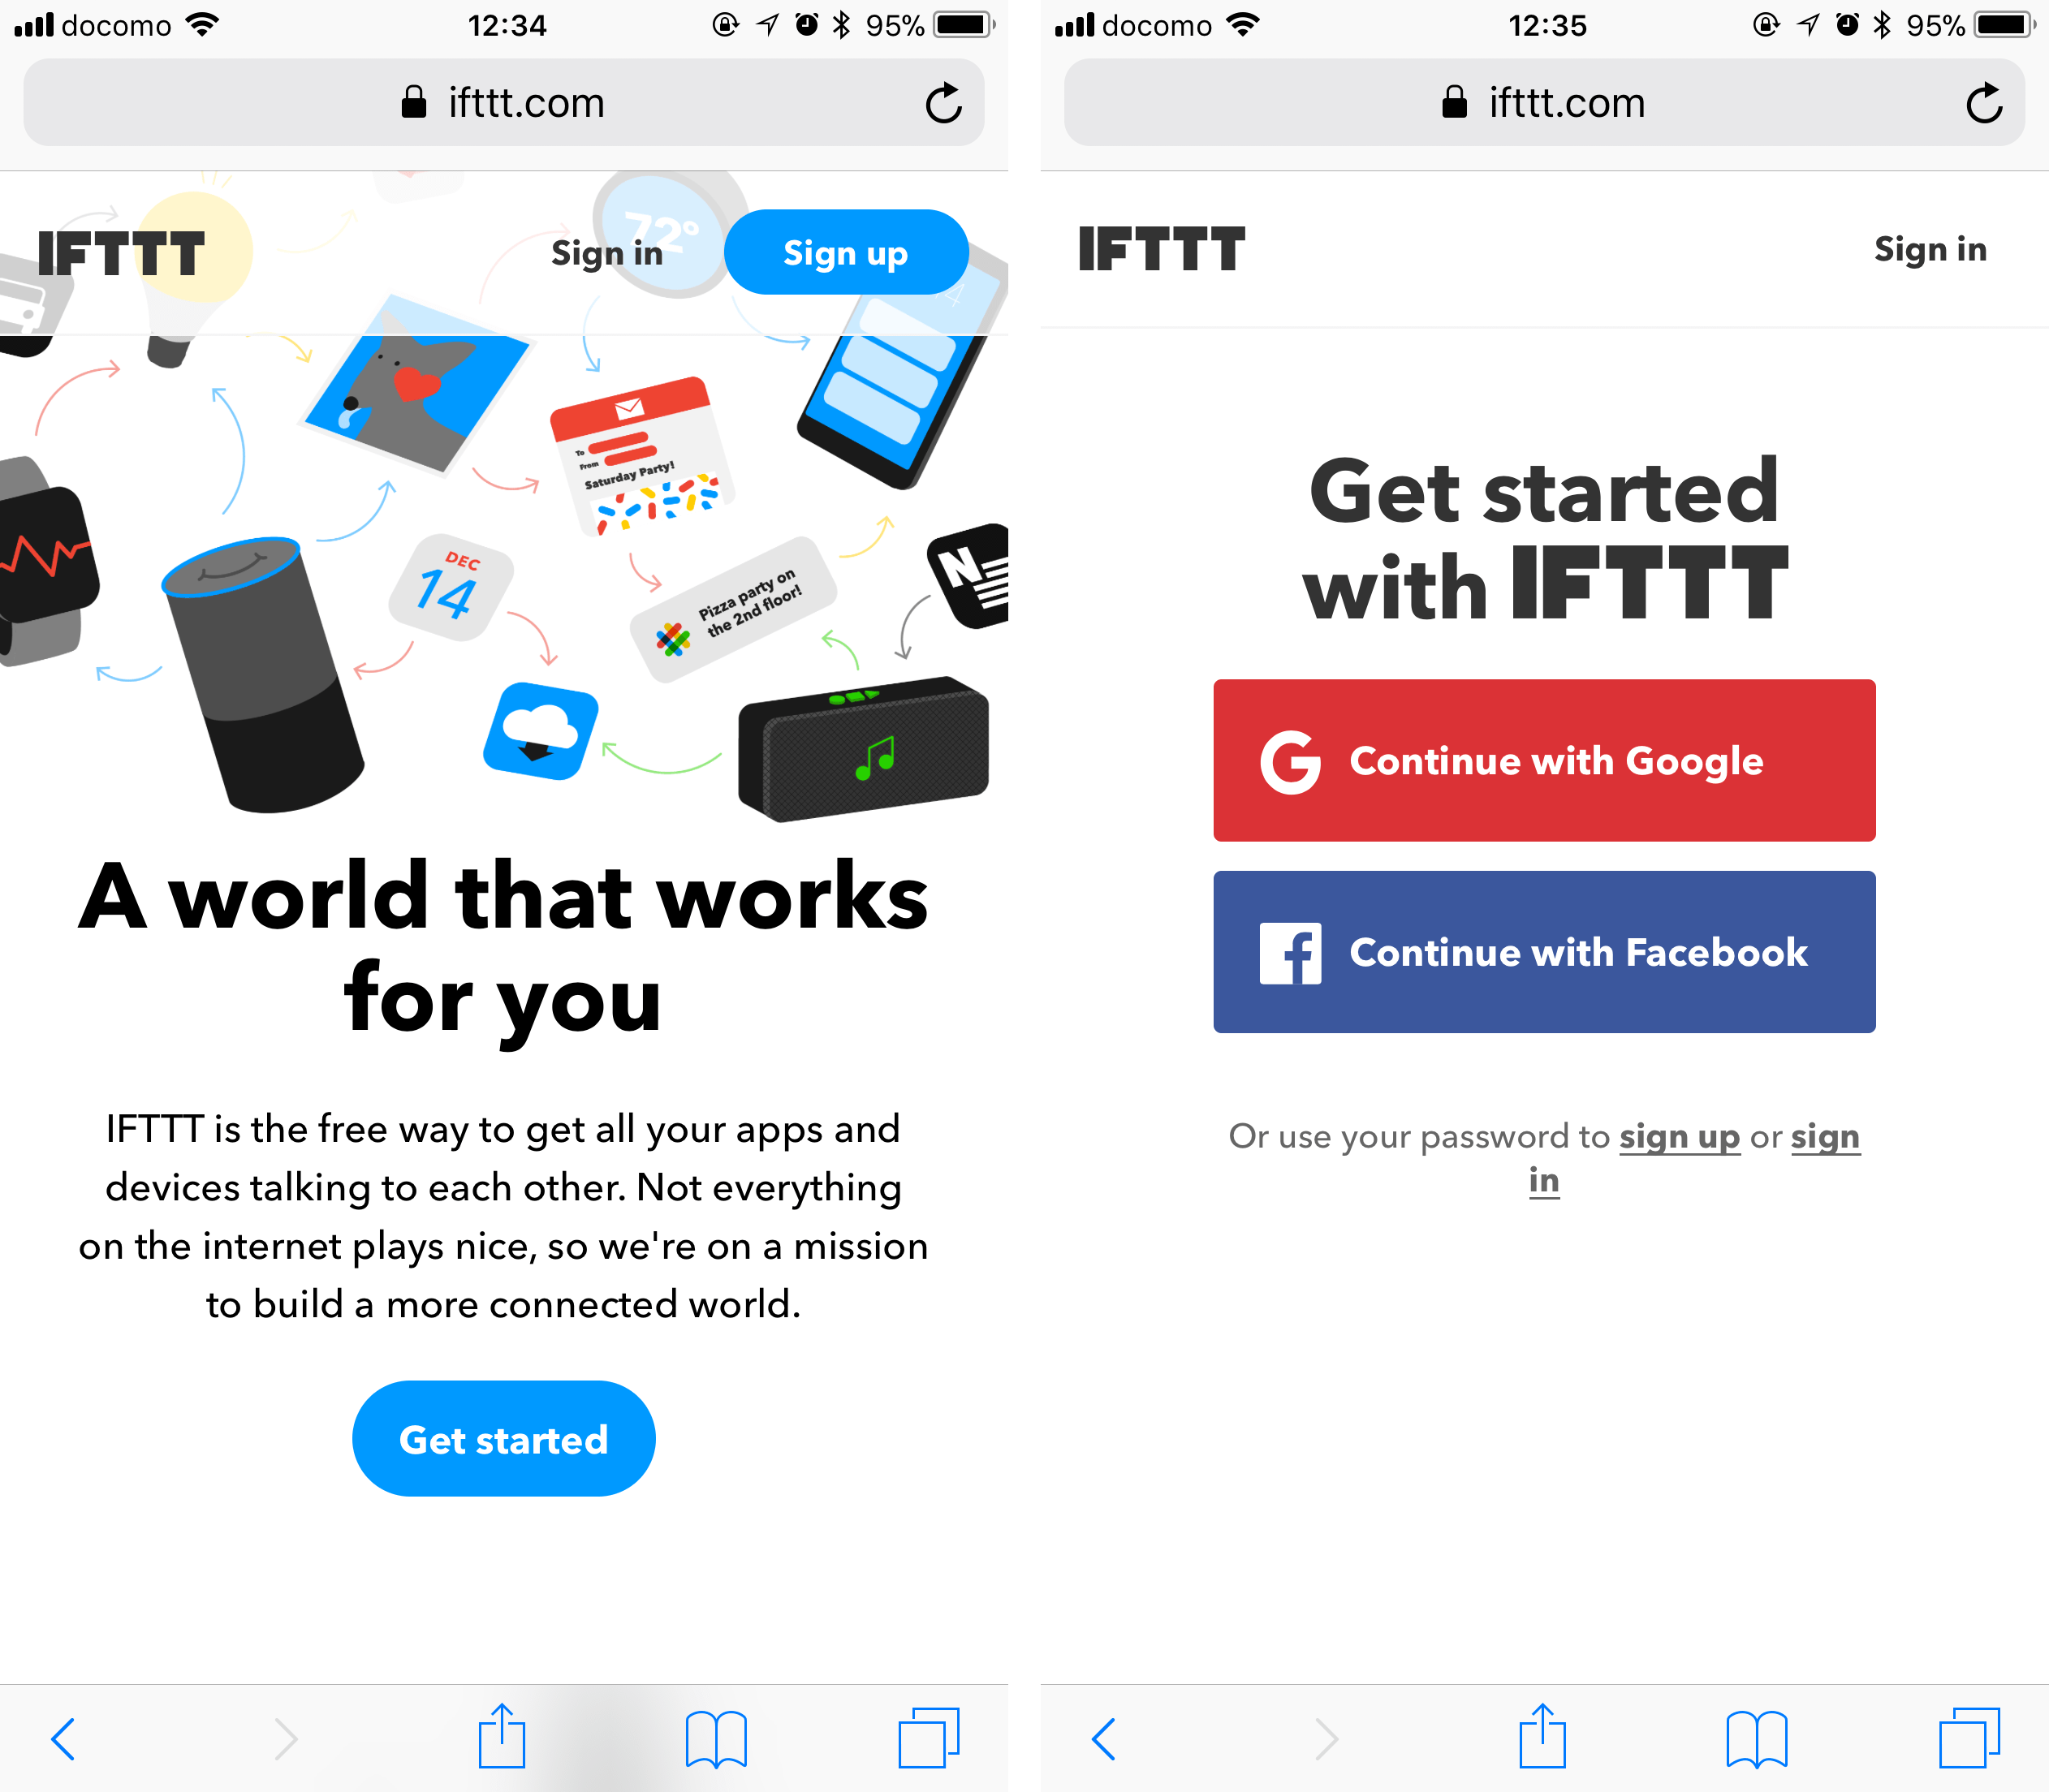 IFTTTにログインする